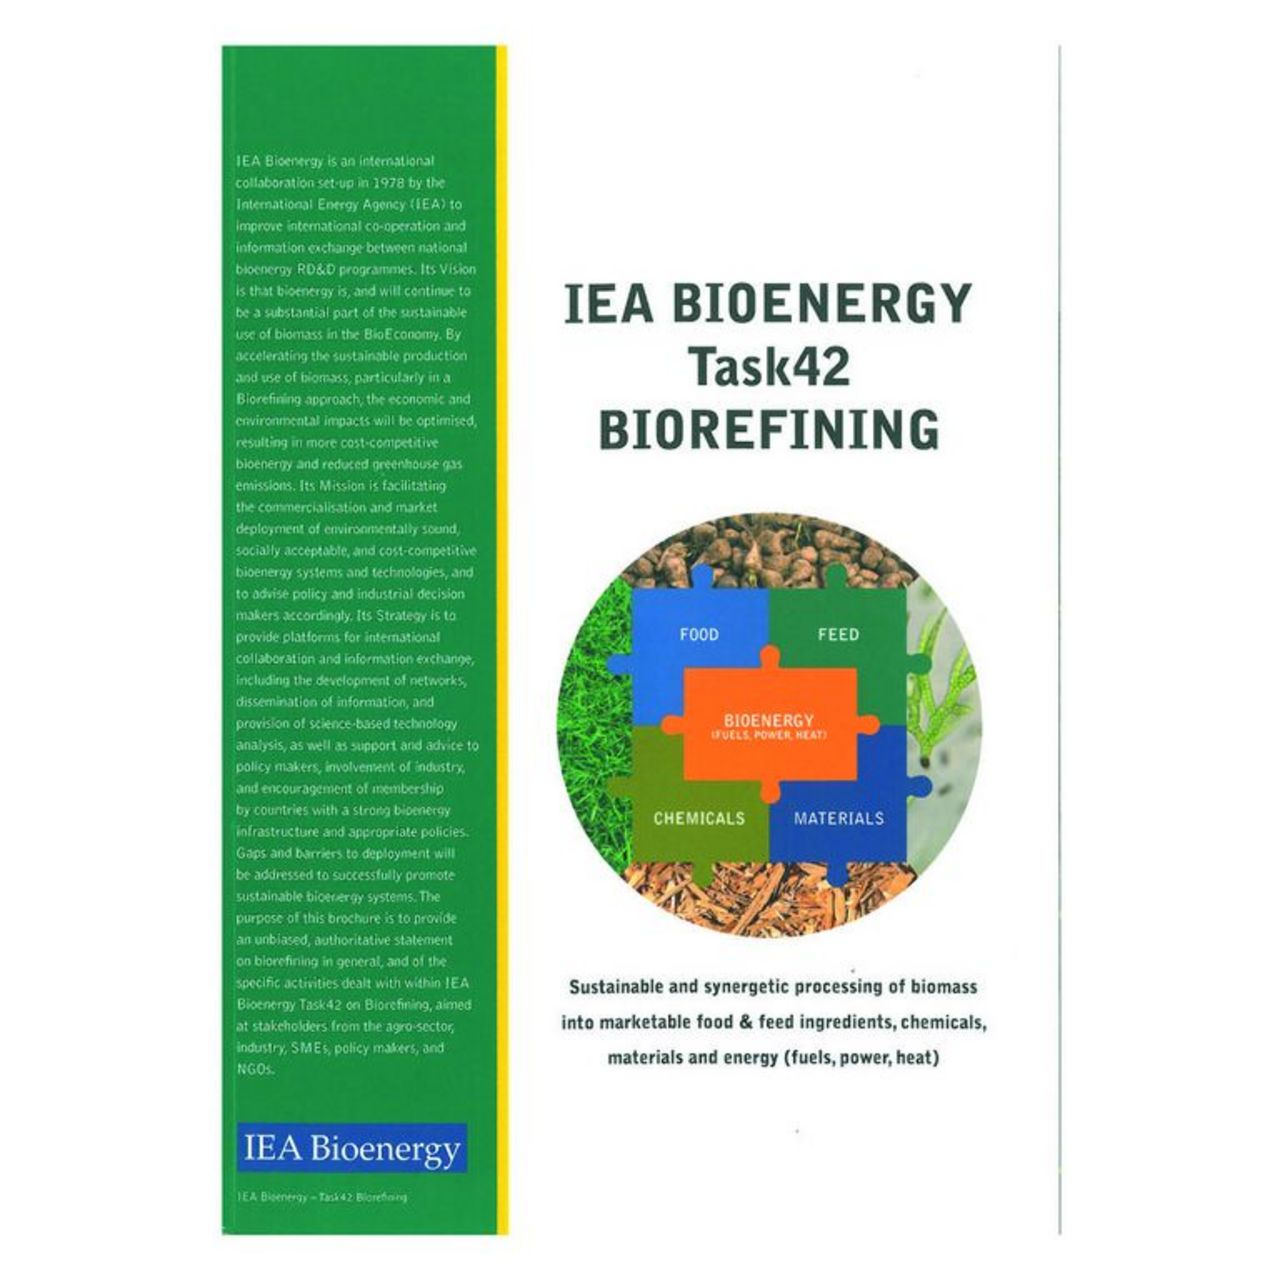 Examples of biorefineries